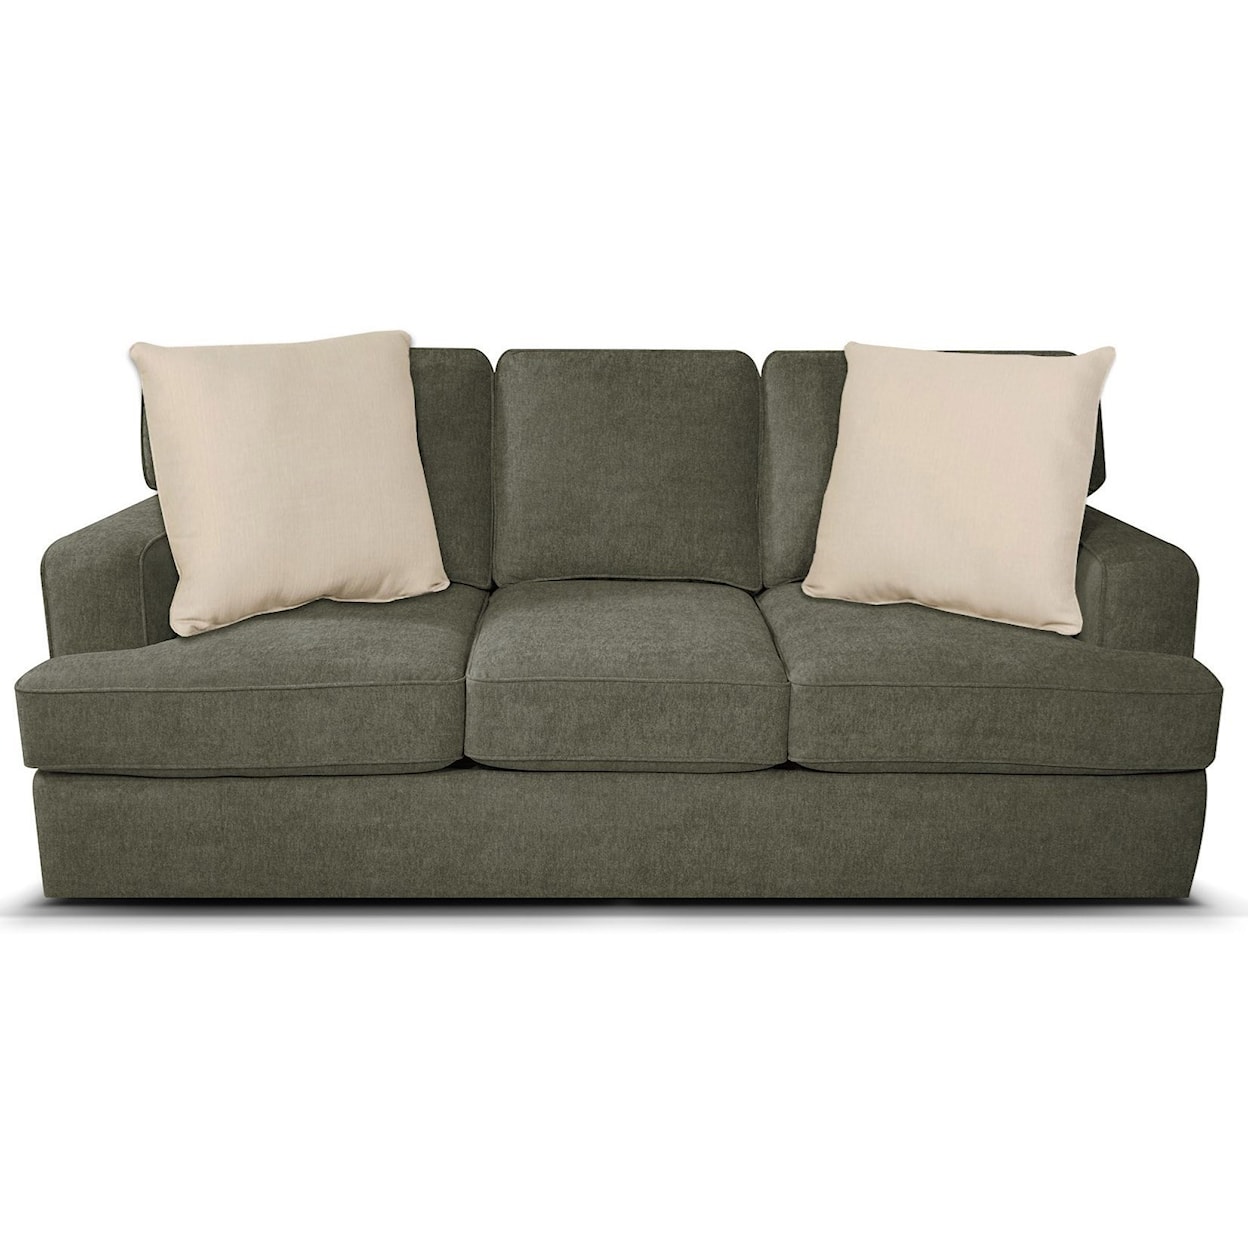 Dimensions 4R00 Series Sofa